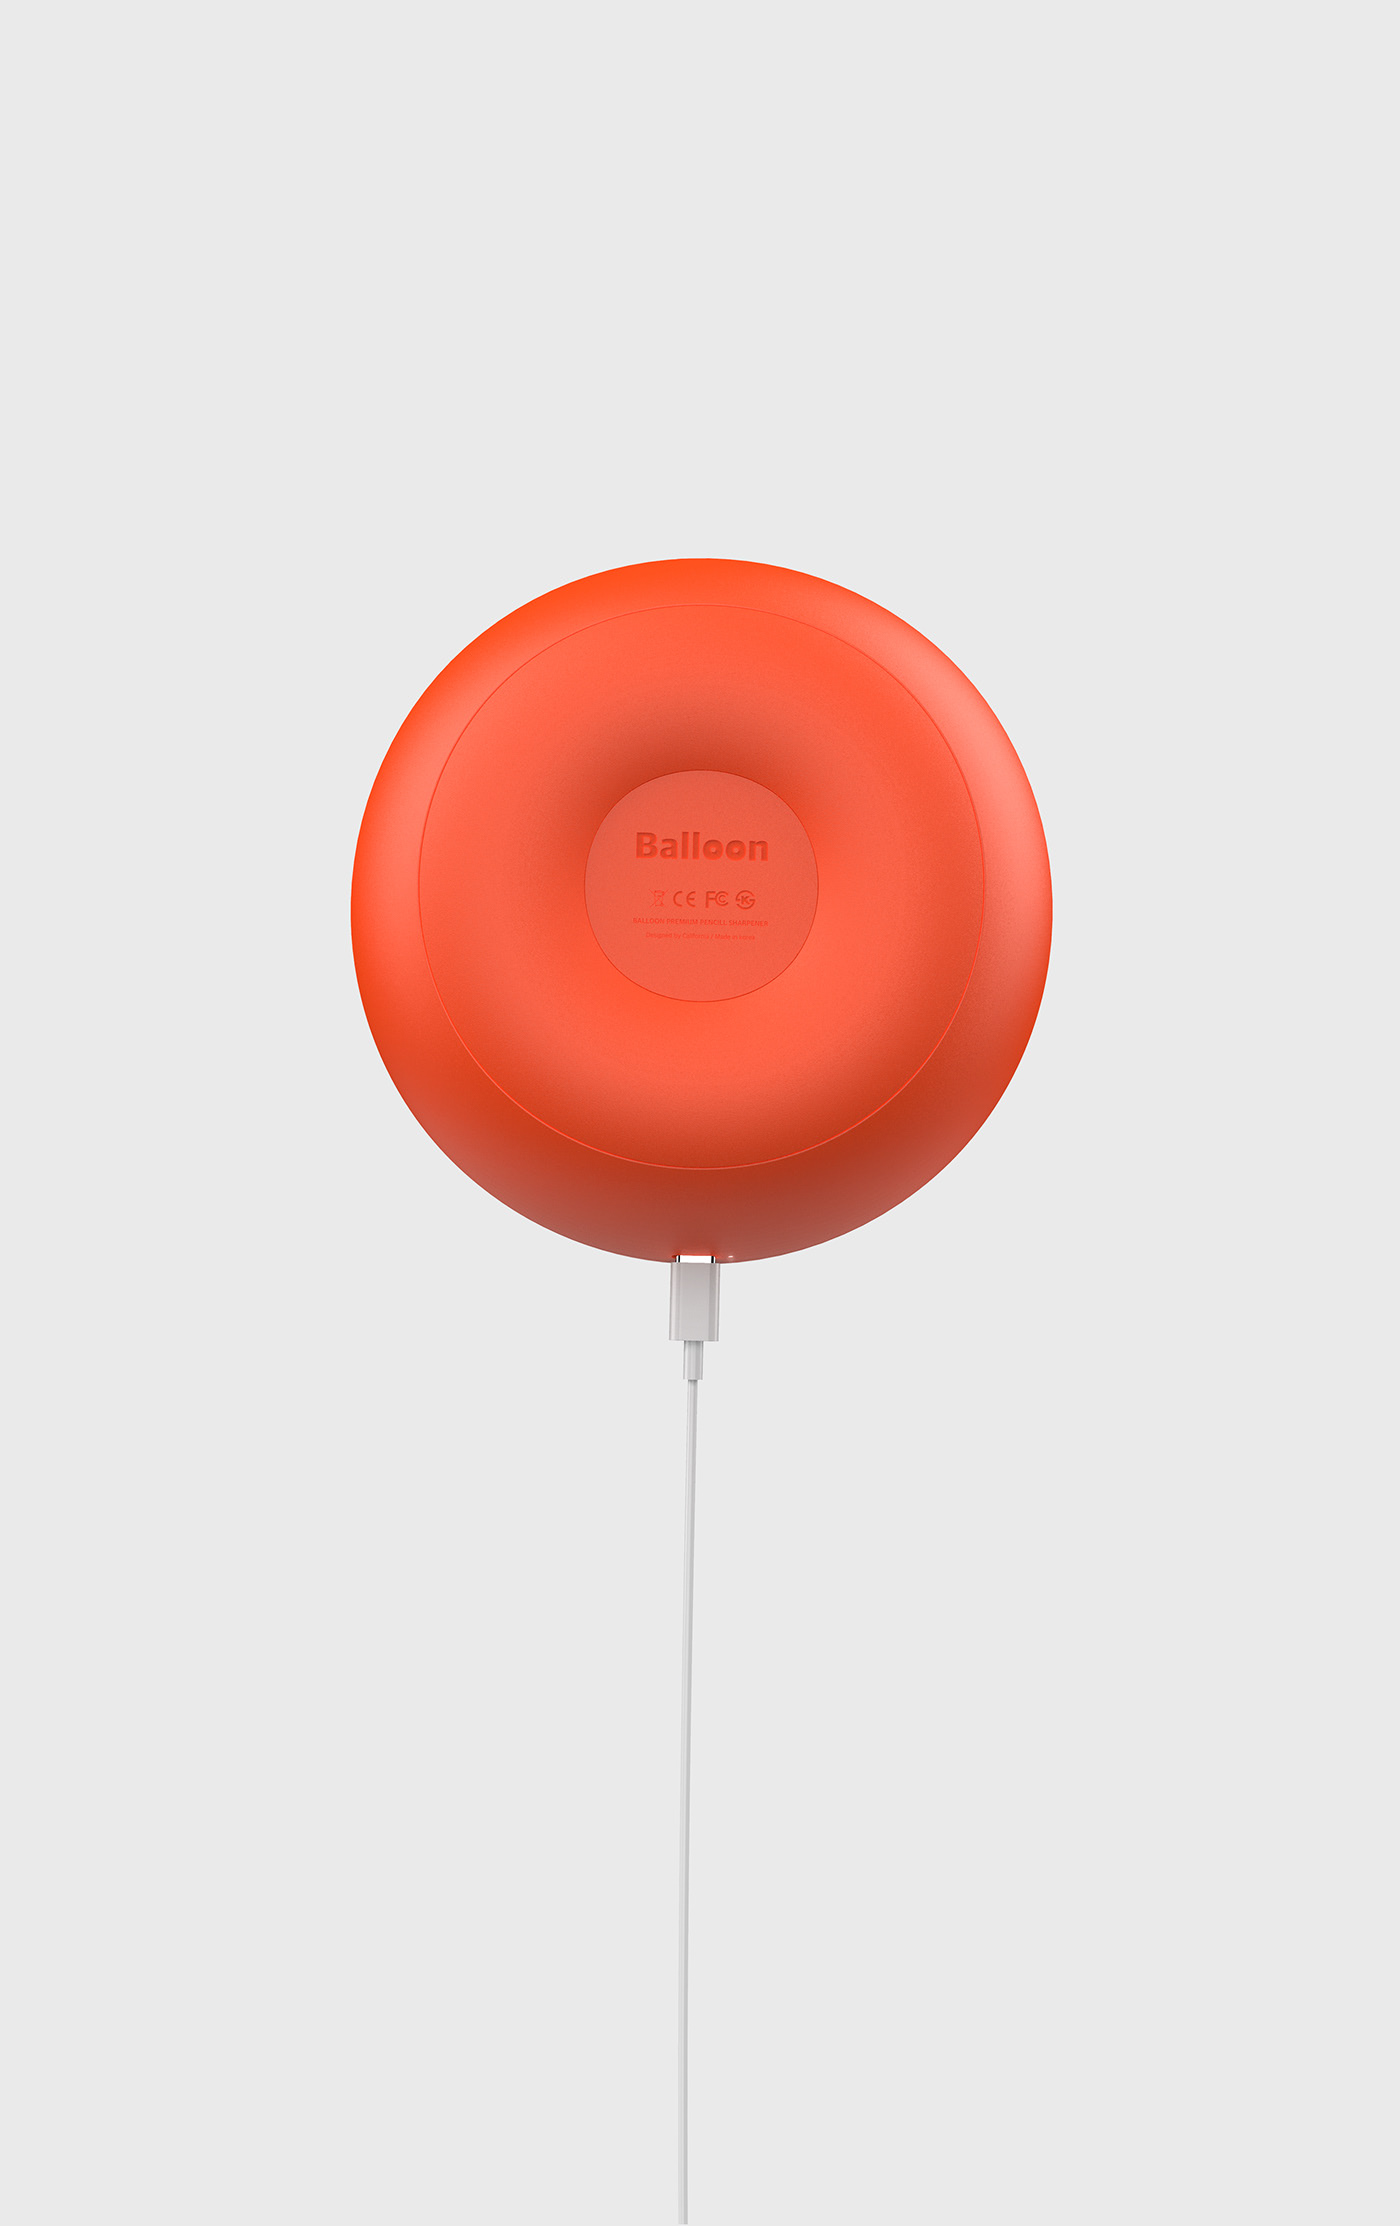 design product design  pencil pencil sharpenner ux UI simple design balloon 3D art